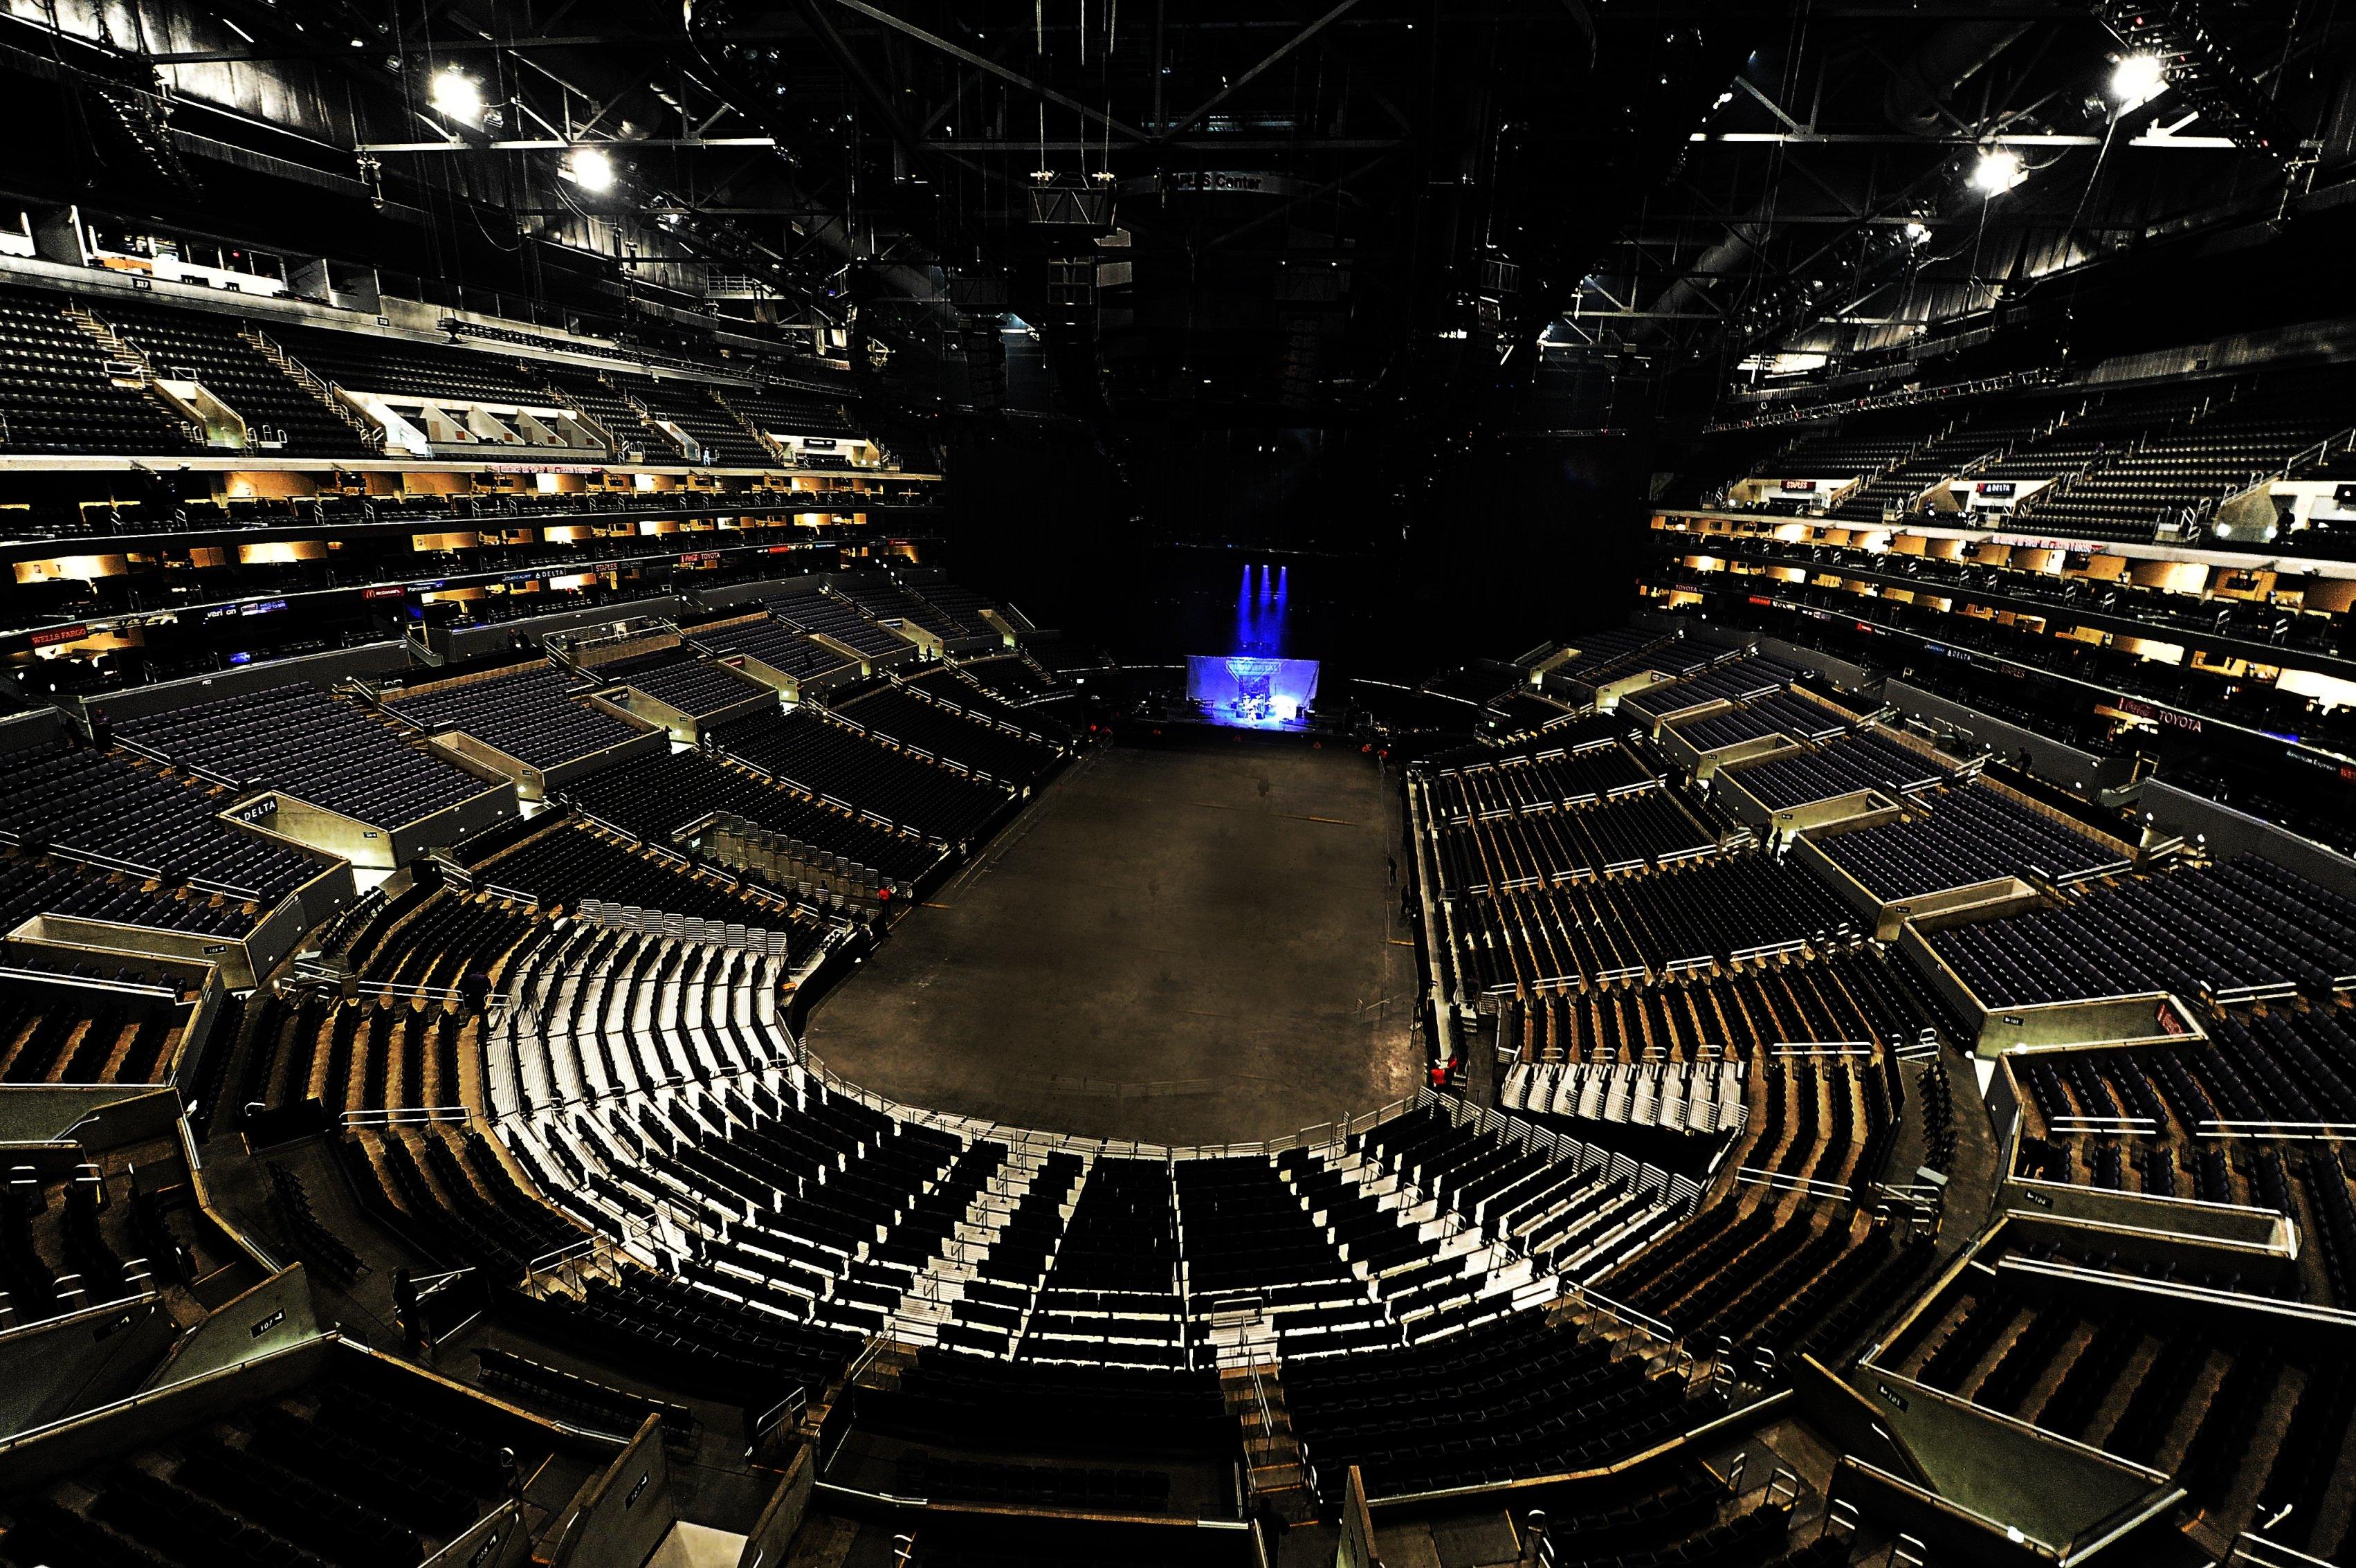 Inside Staples Center in Los Angeles